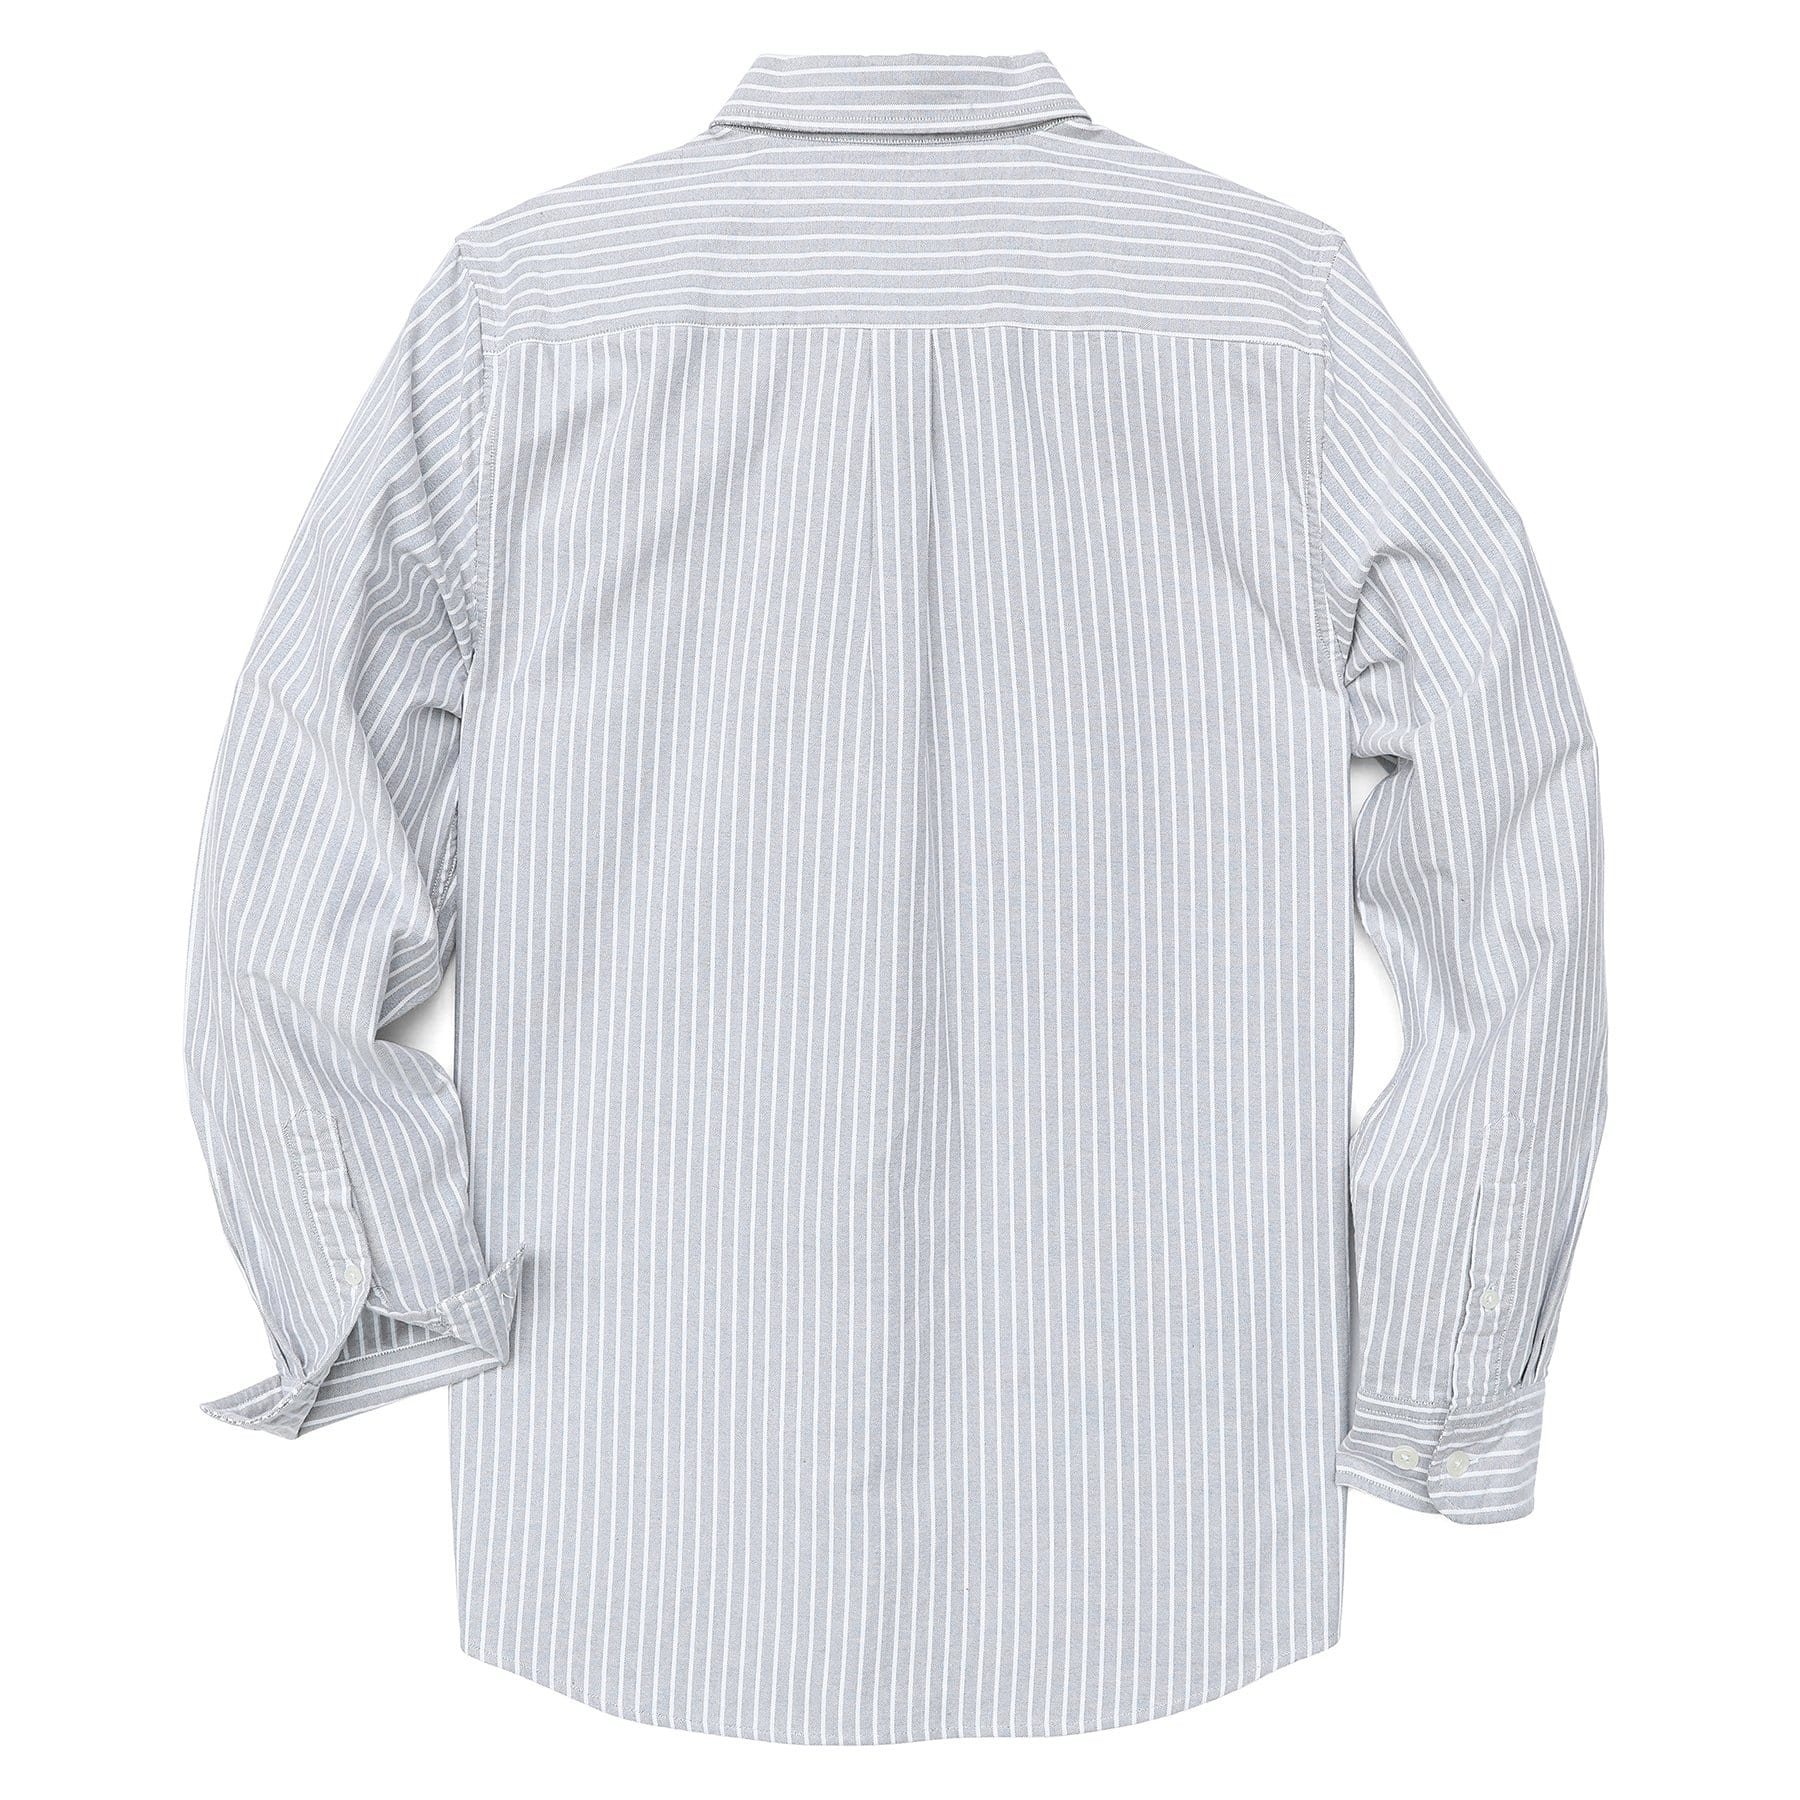 Men's casual long sleeve oxford shirt #1402